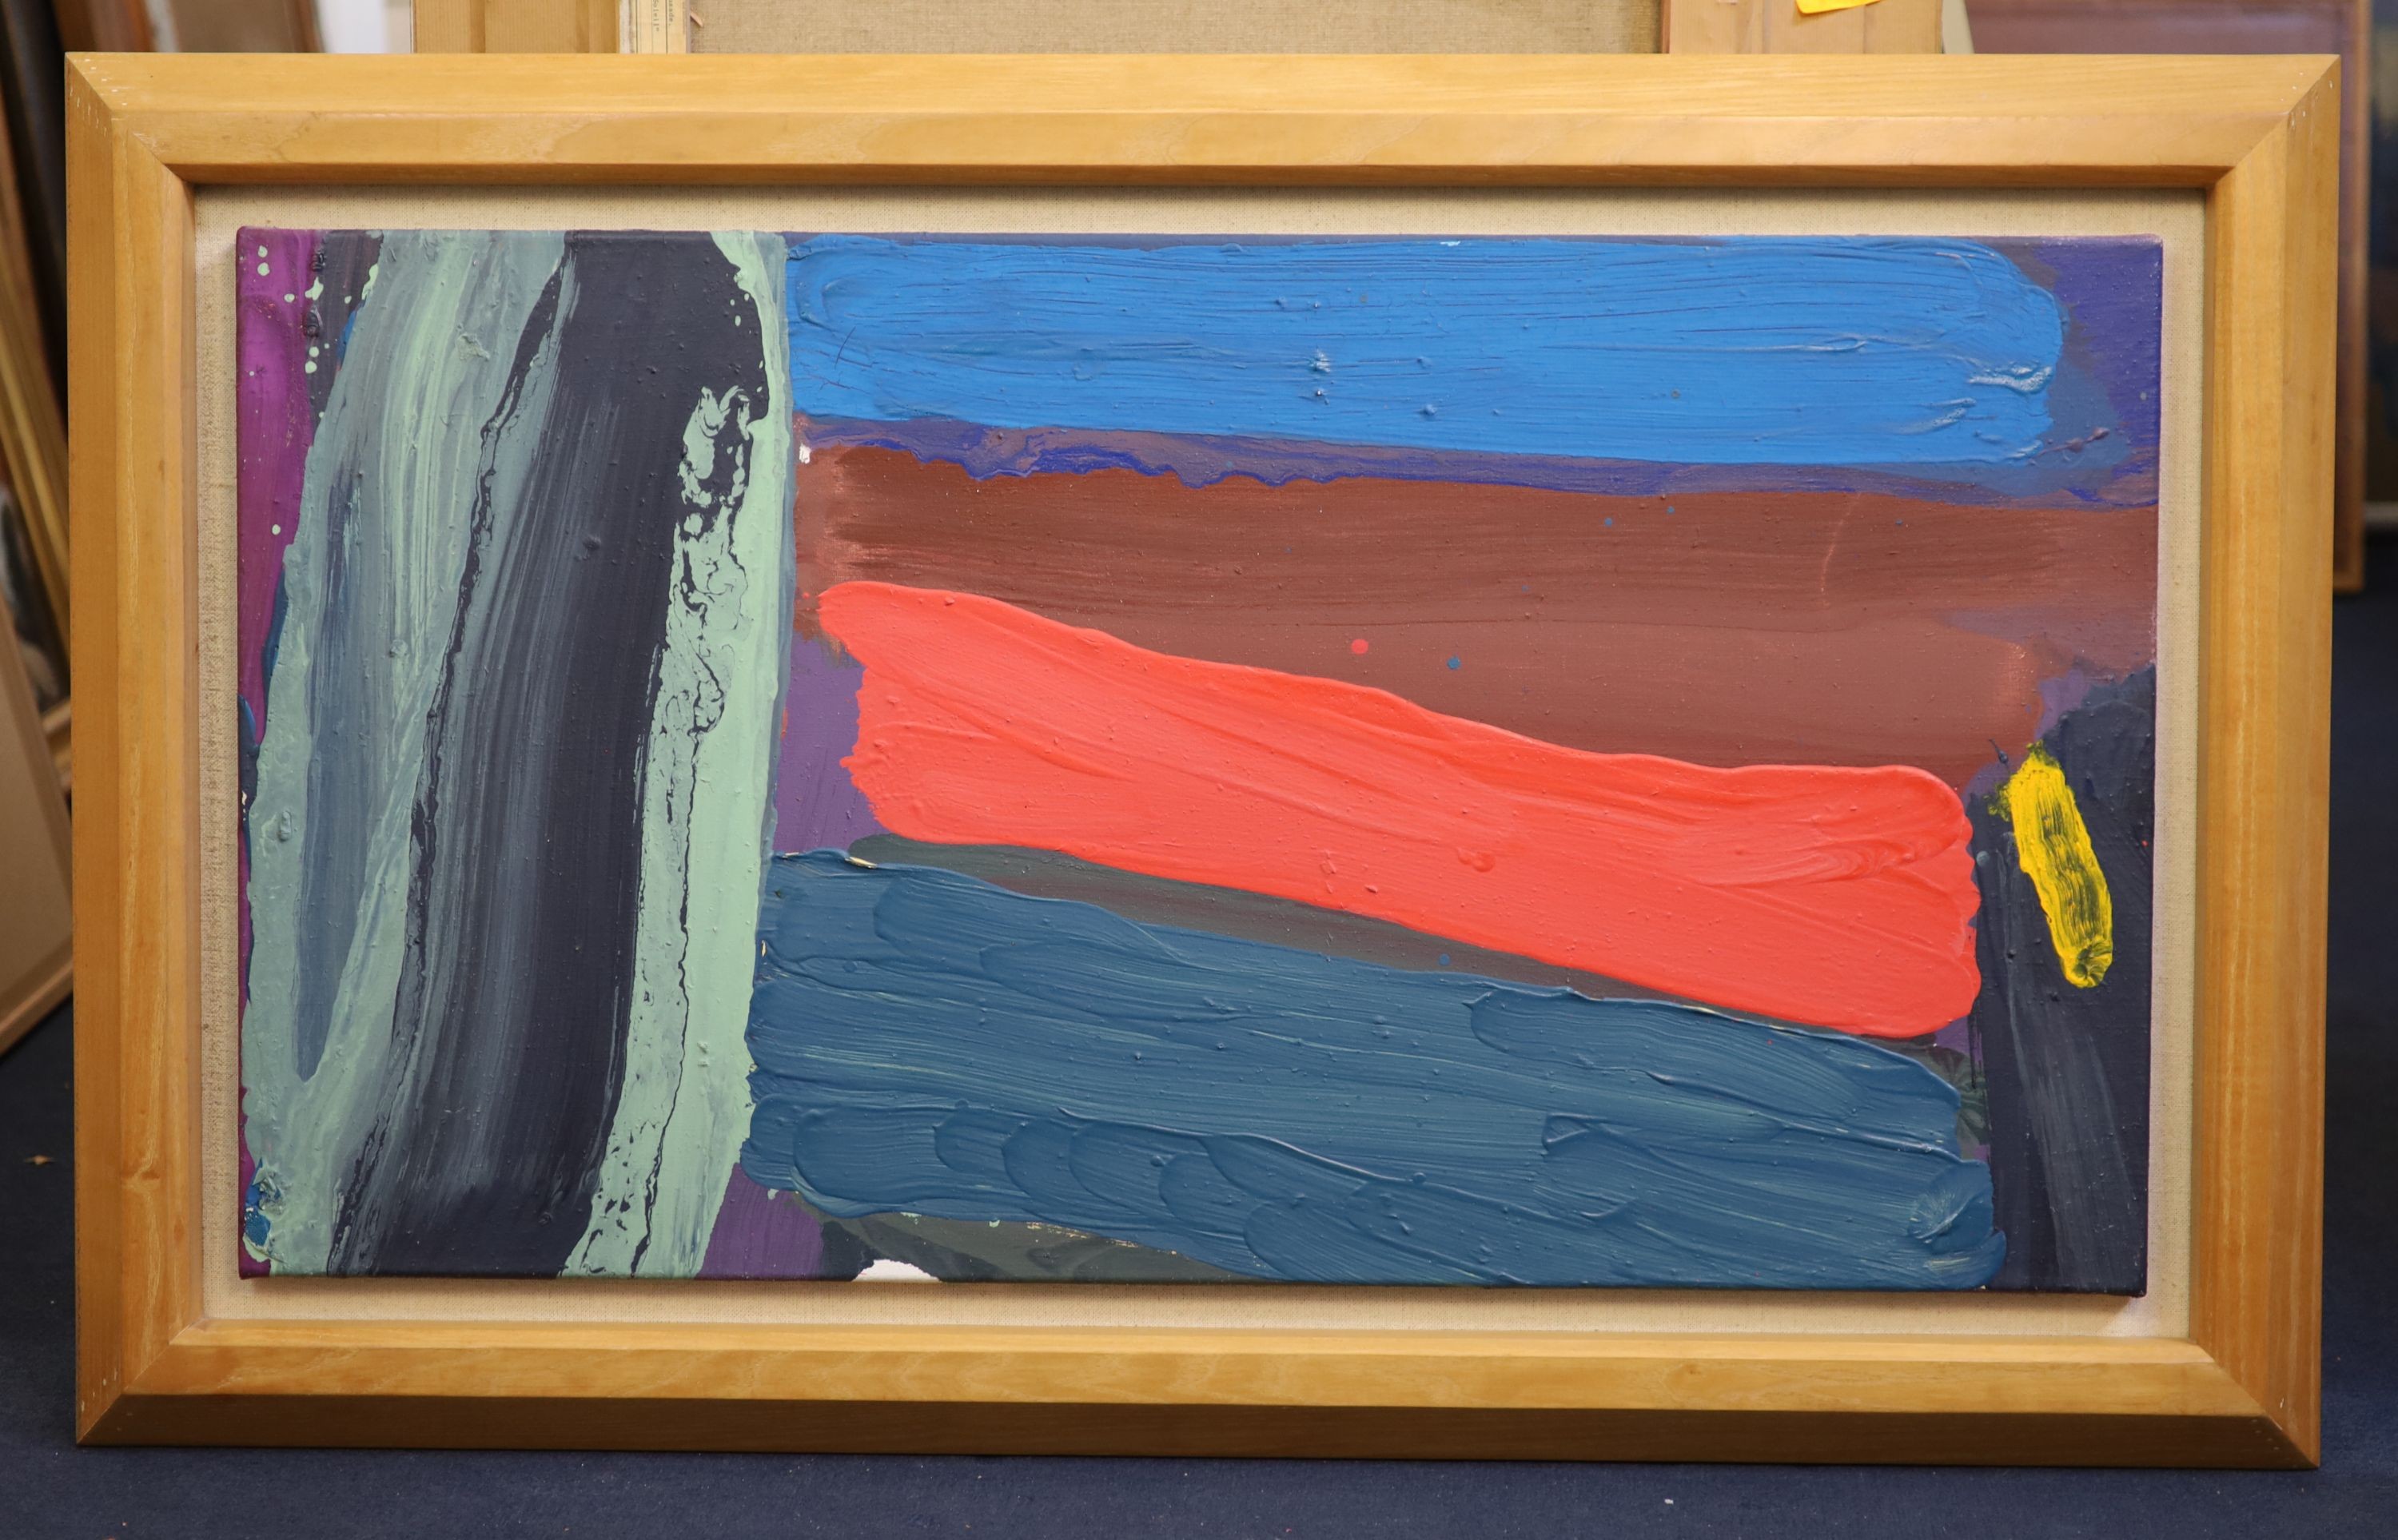 Alan Gouk (1939-), 'Salmon Hetchlew', oil on canvas, 56 x 102cm.